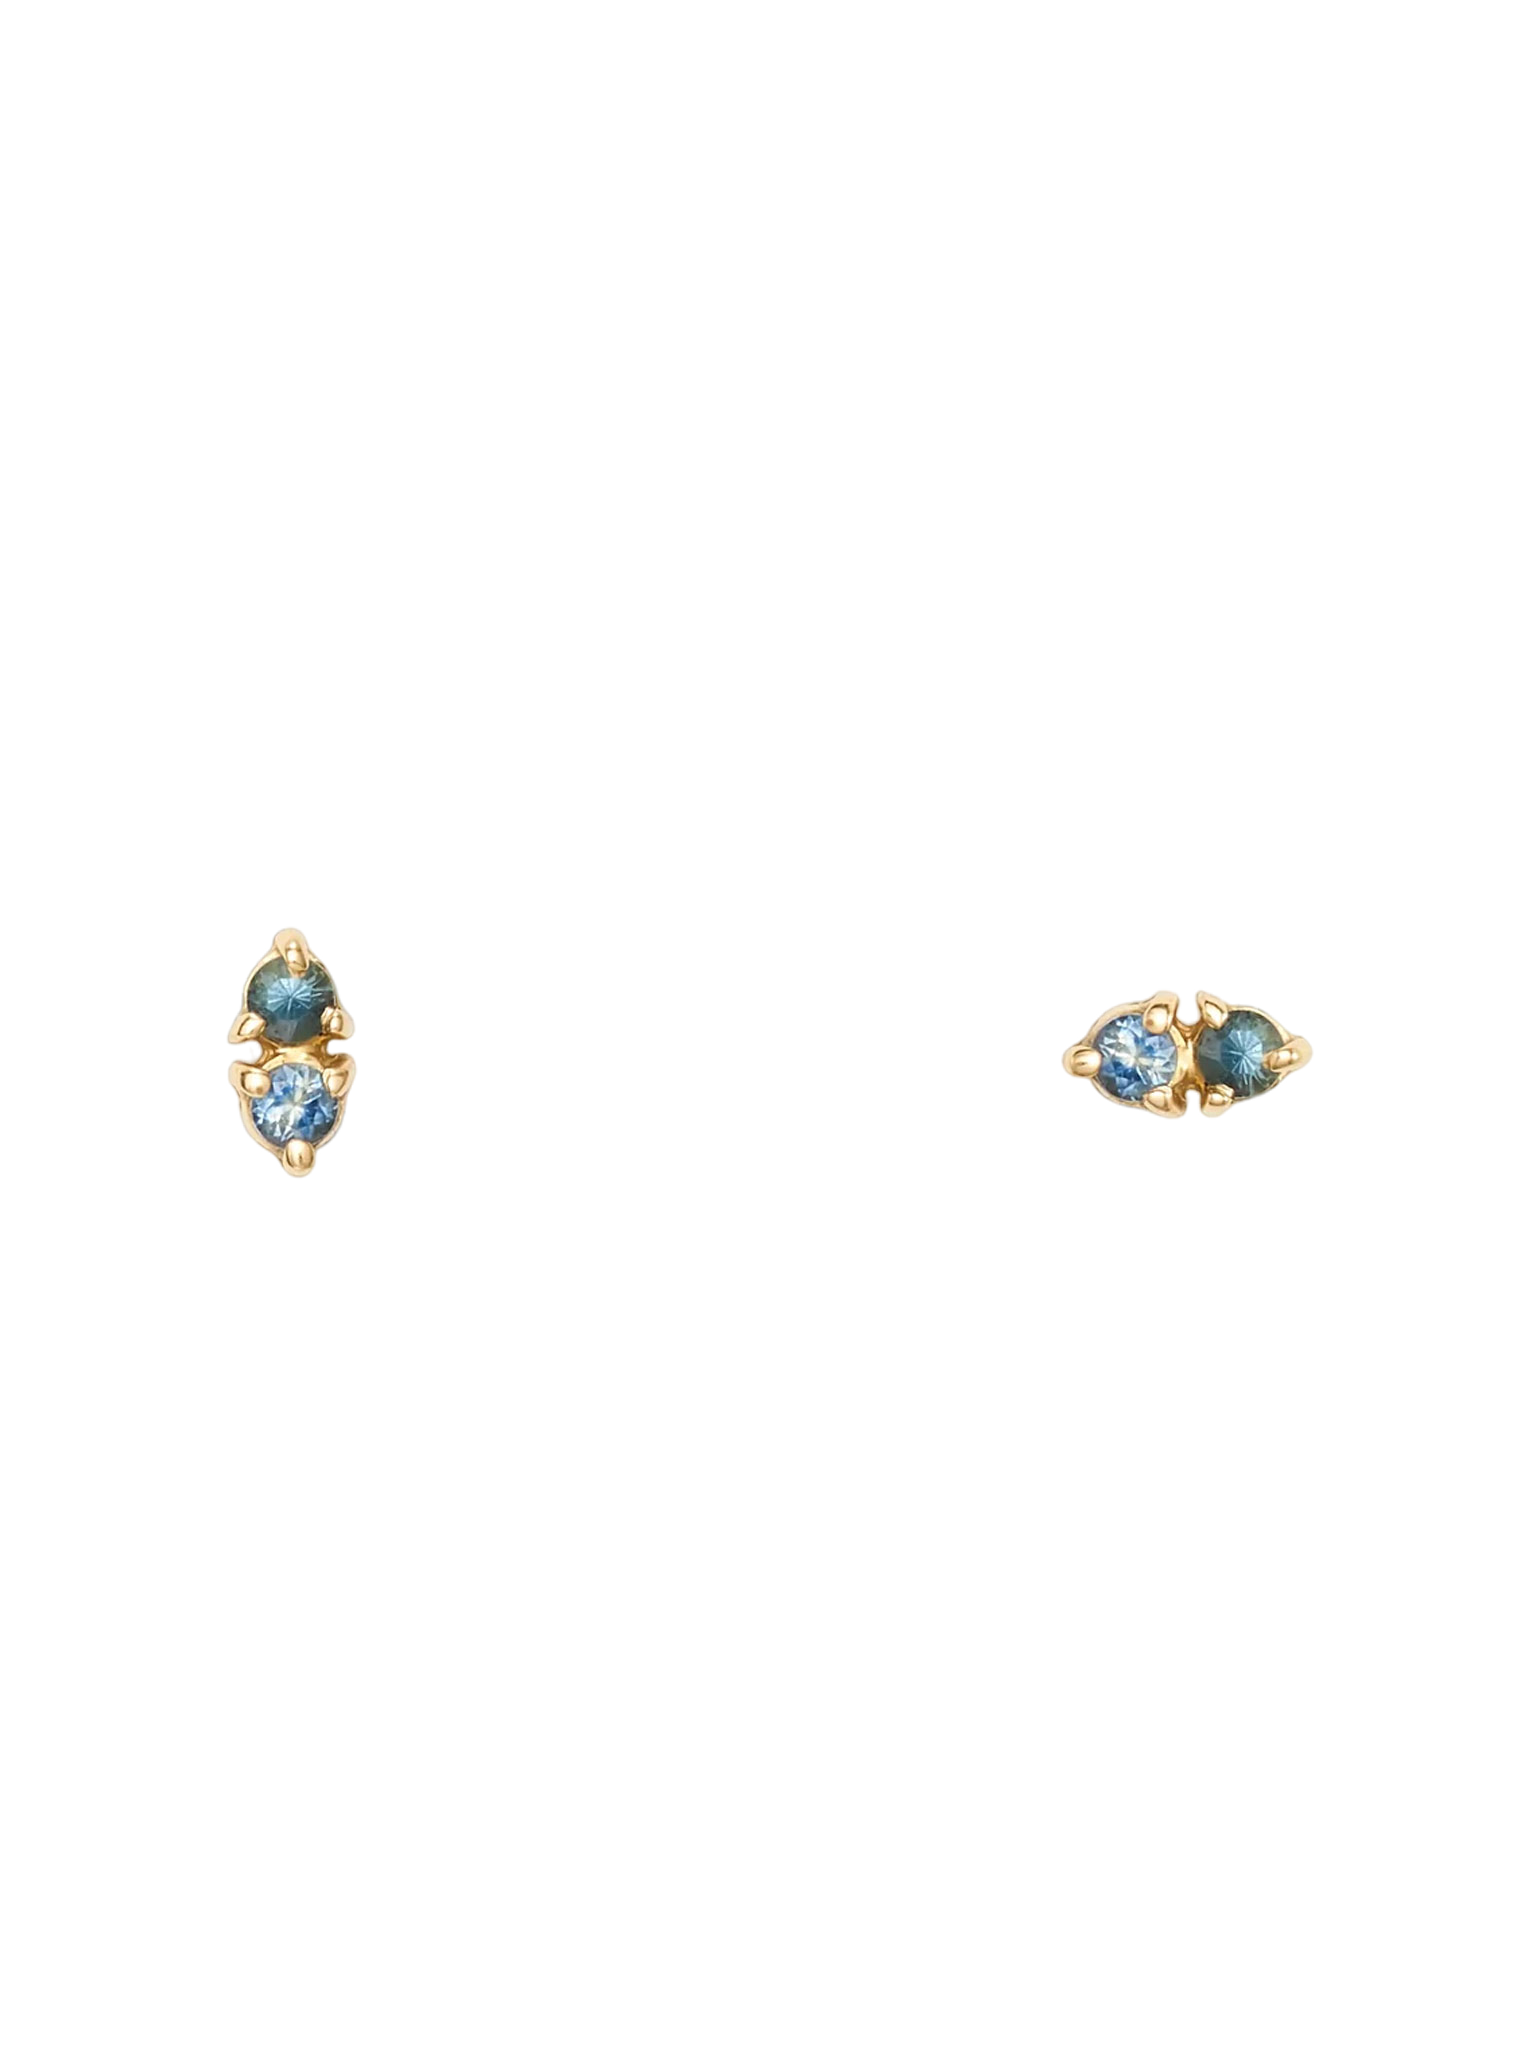 Tonal two-step earrings